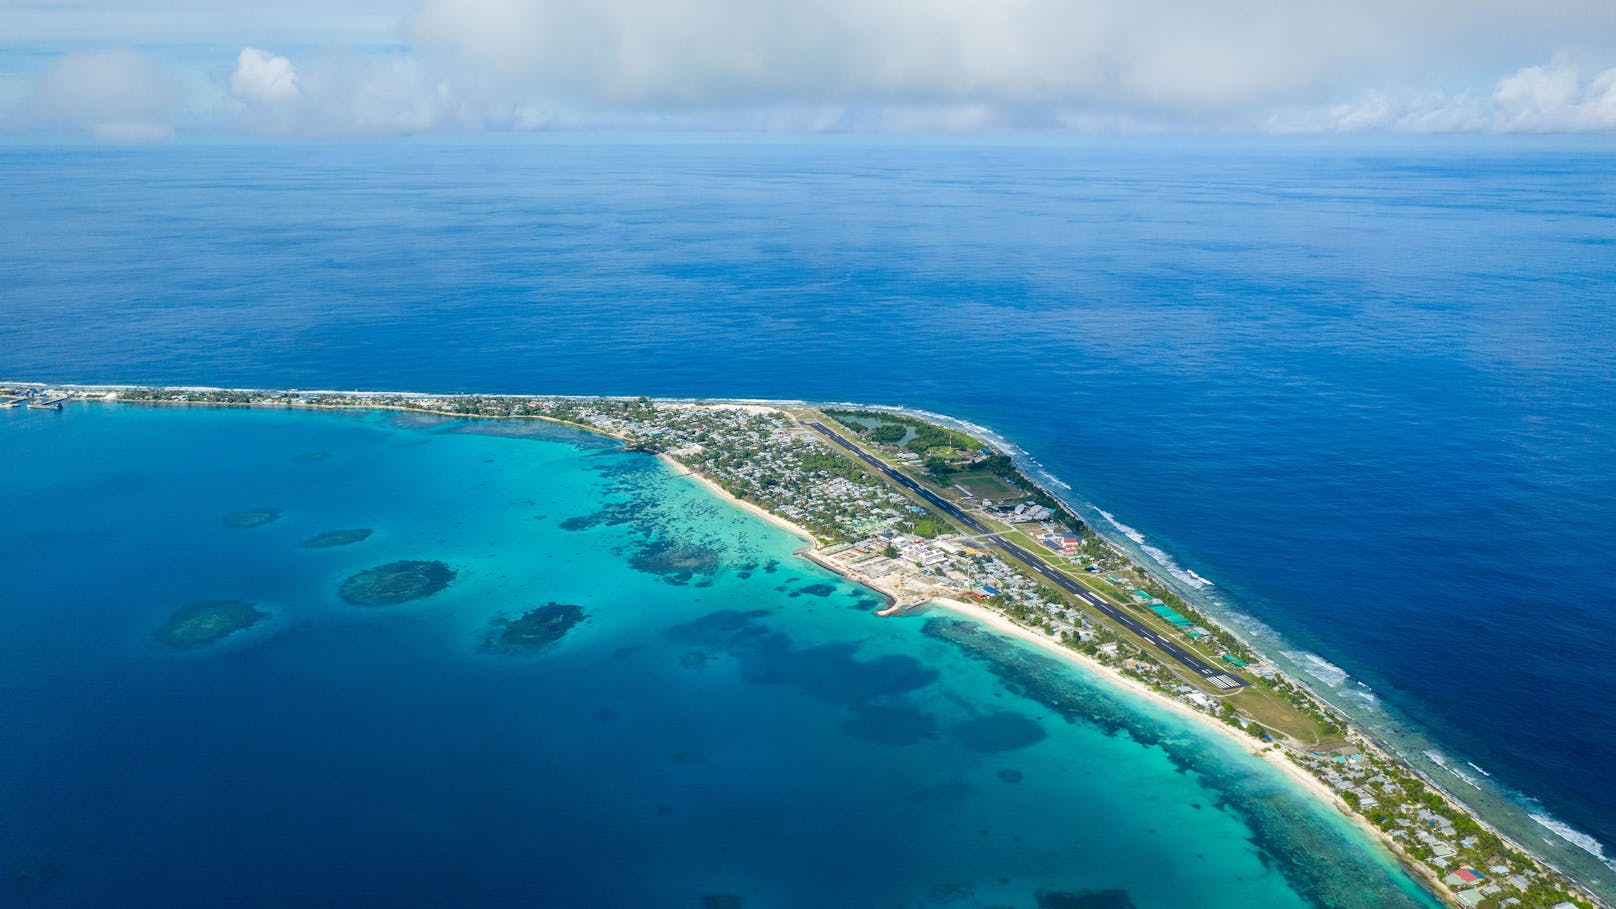 Insel versinkt – Tuvaluer erhalten Asyl in Australien